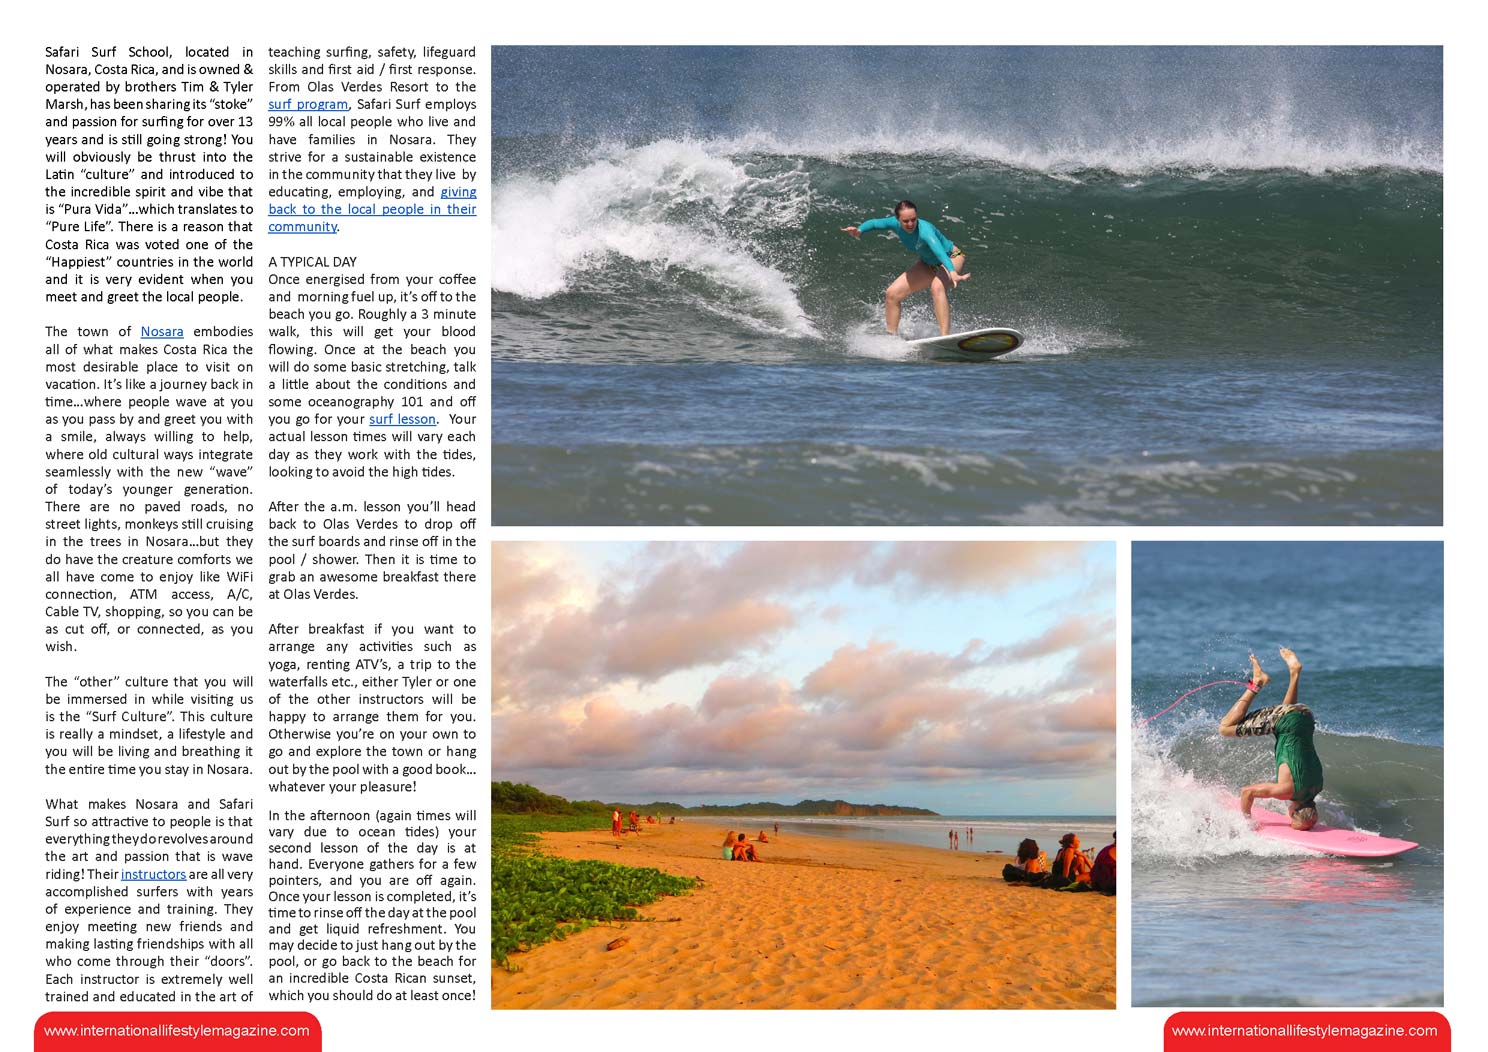 international-lifestyle-magazine-safari-surf-school-featured-page-2